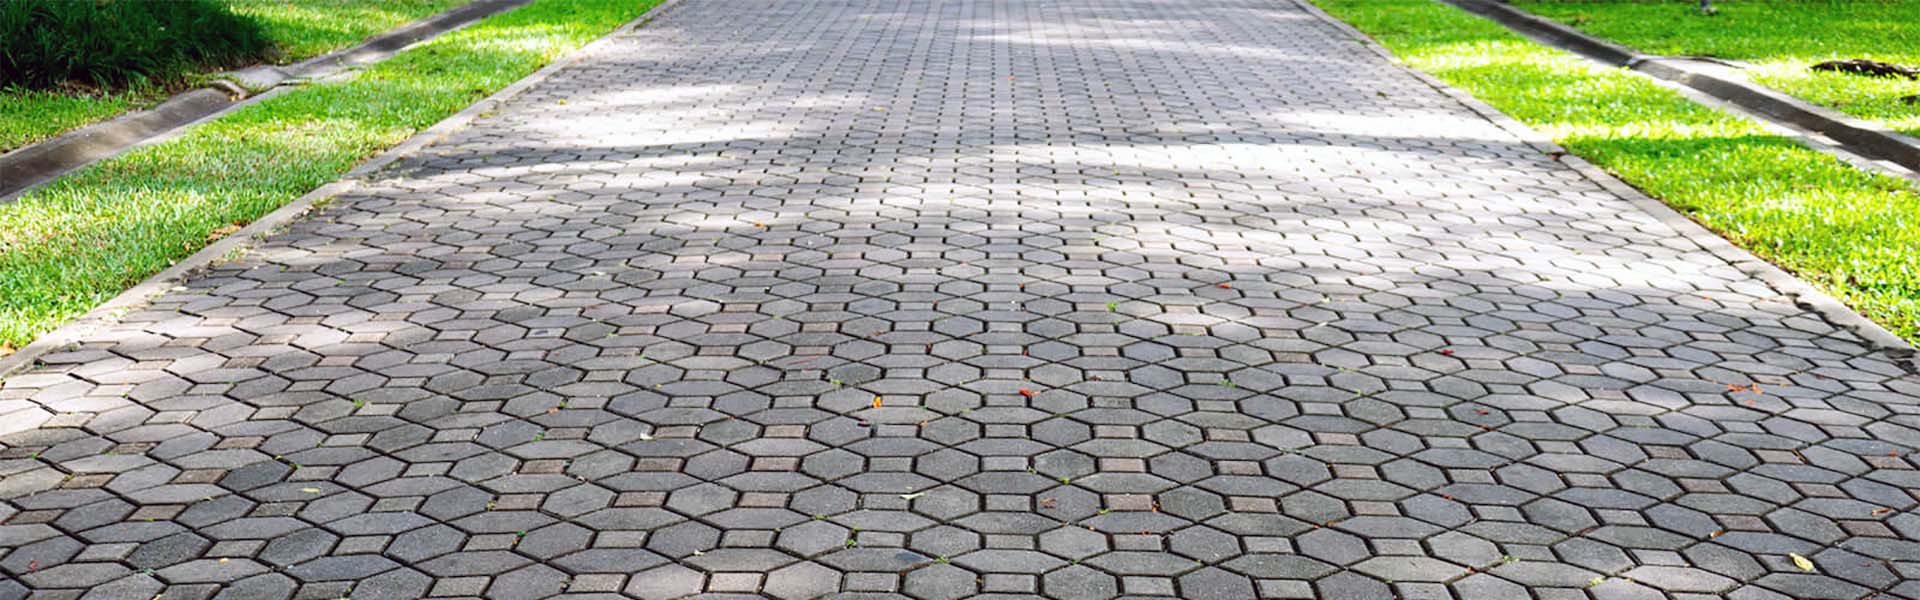 concrete walkway of pavers